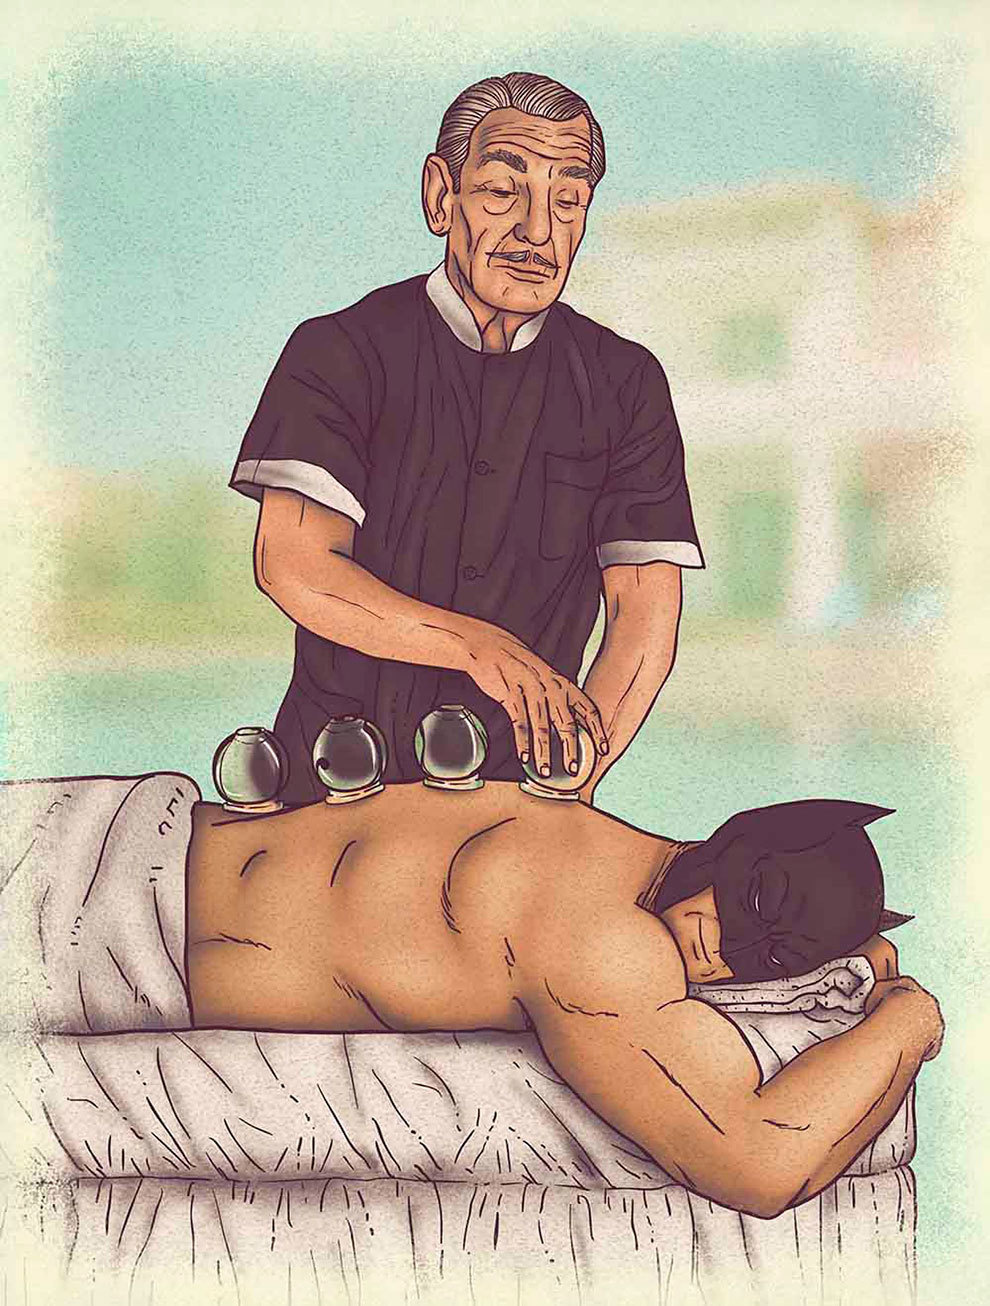 Massages are definitely part of Batman's Self Care Saturdays.